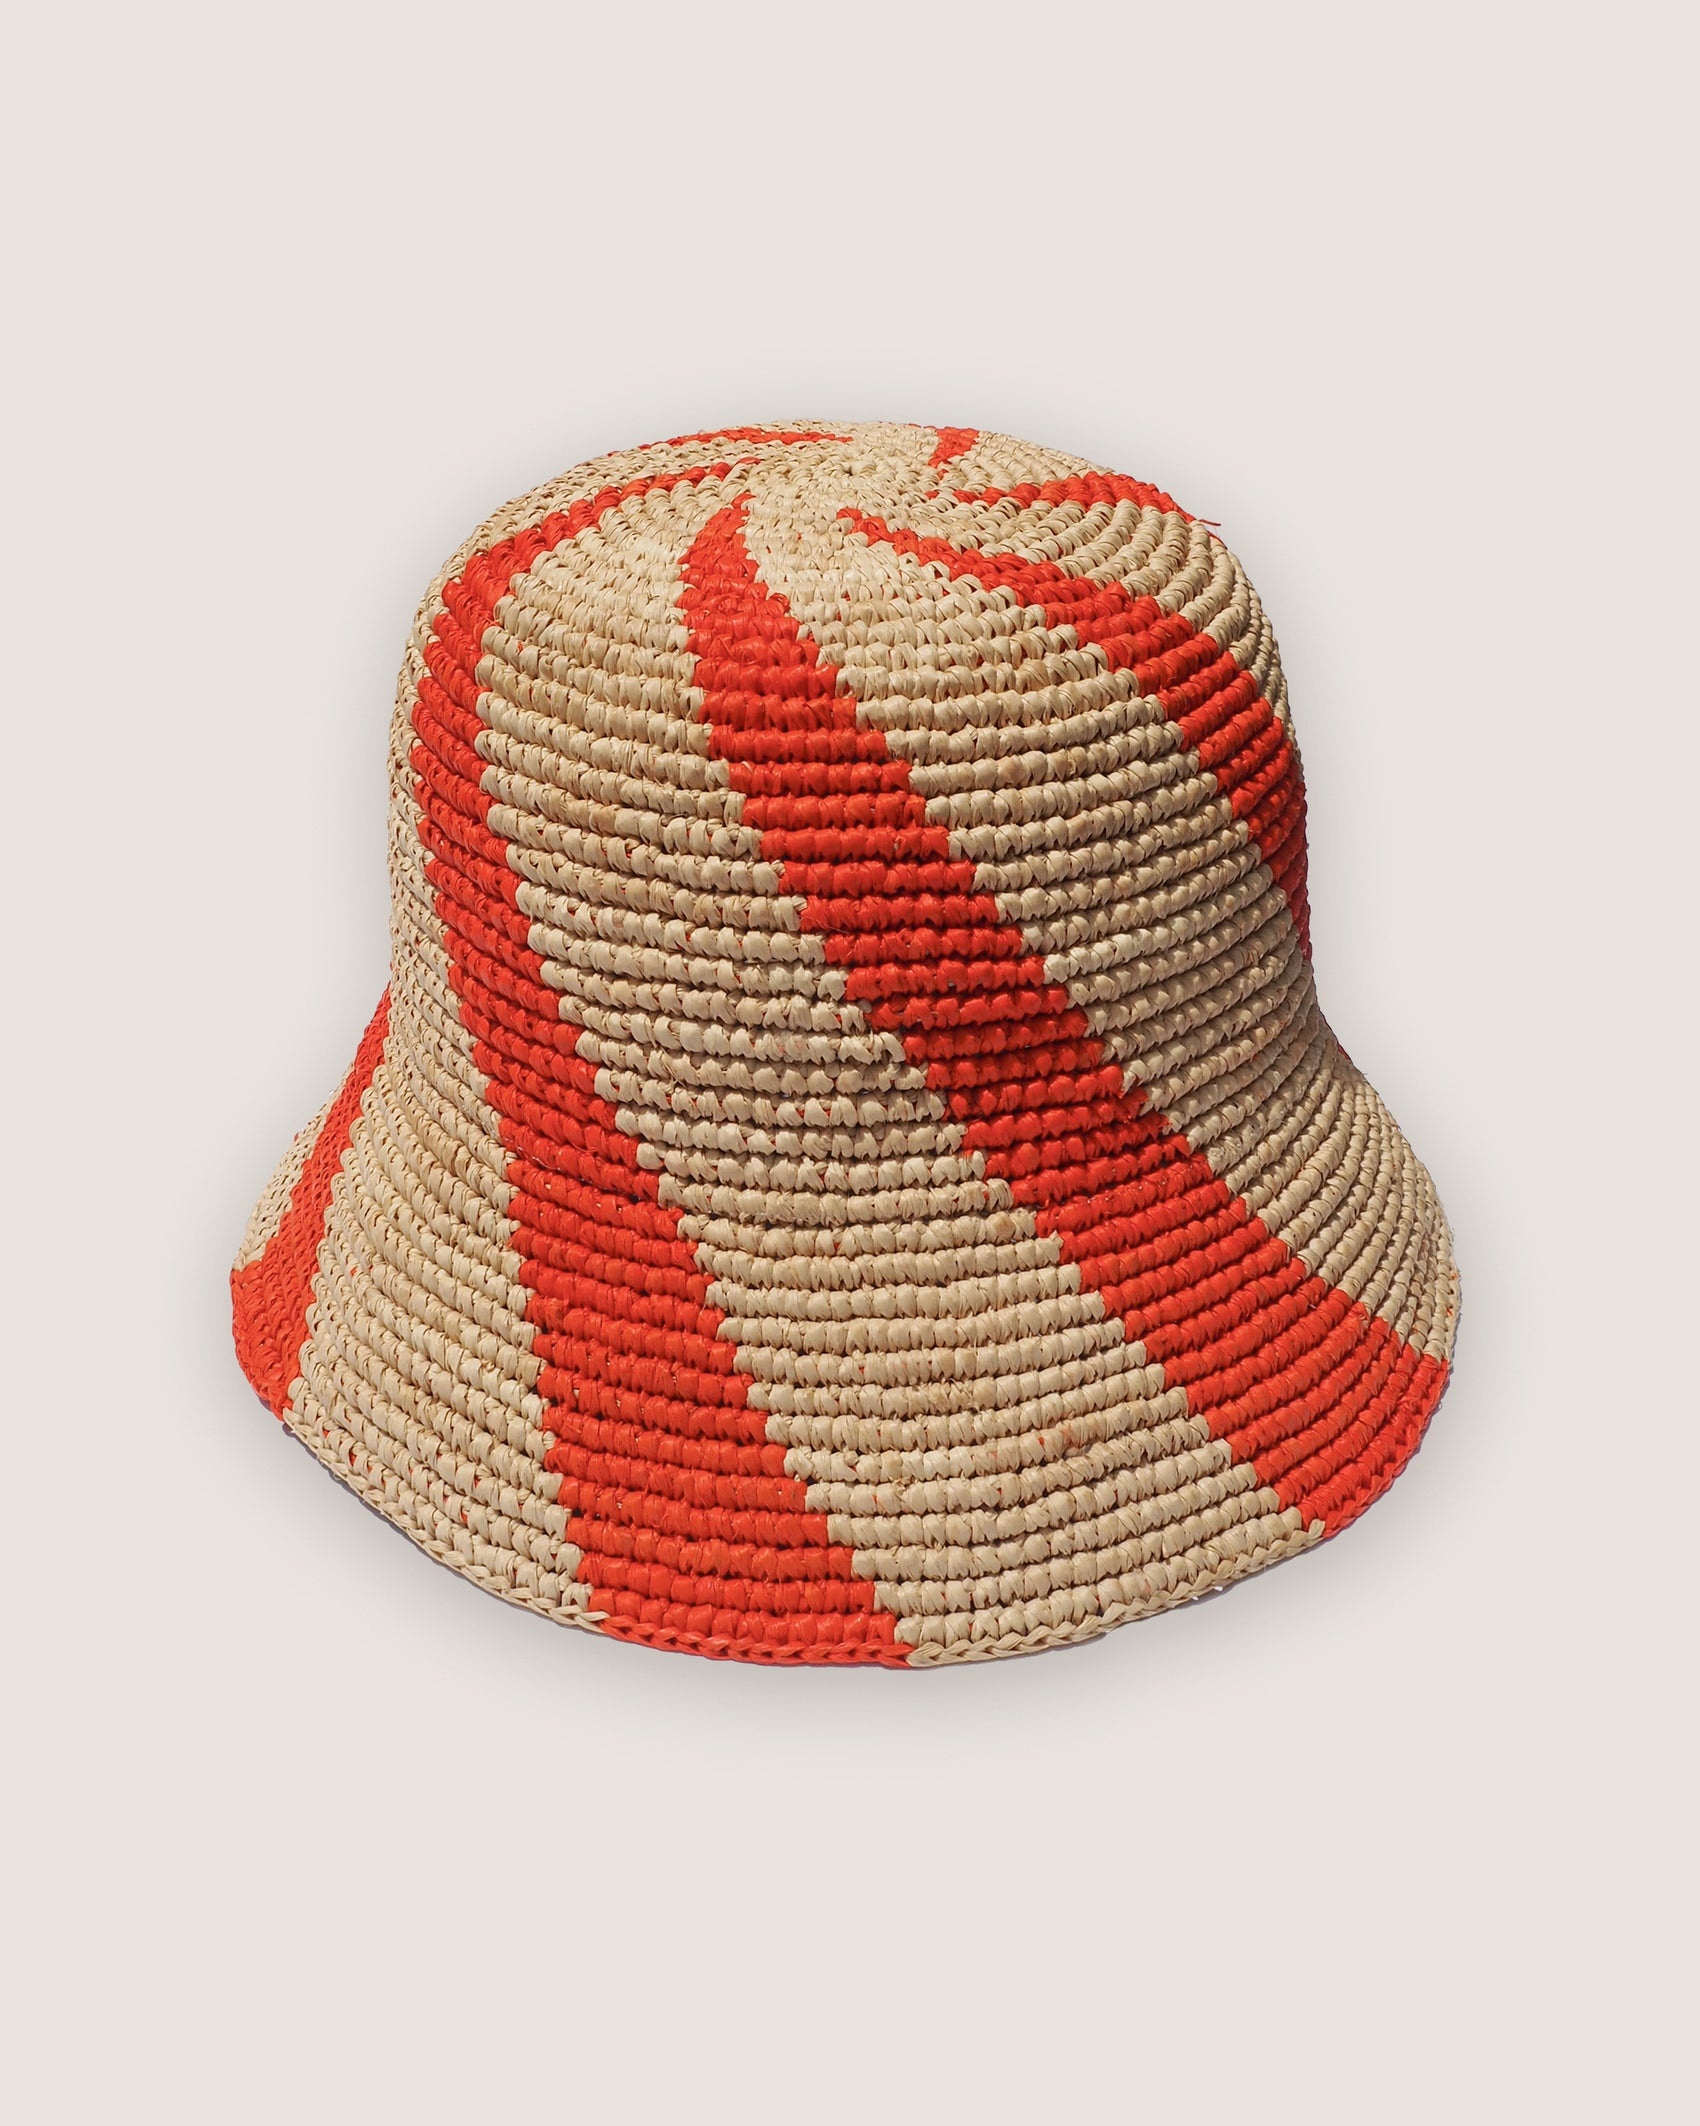 Jace Banu Cyla Bucket Hat - Orange & Natural Spiral